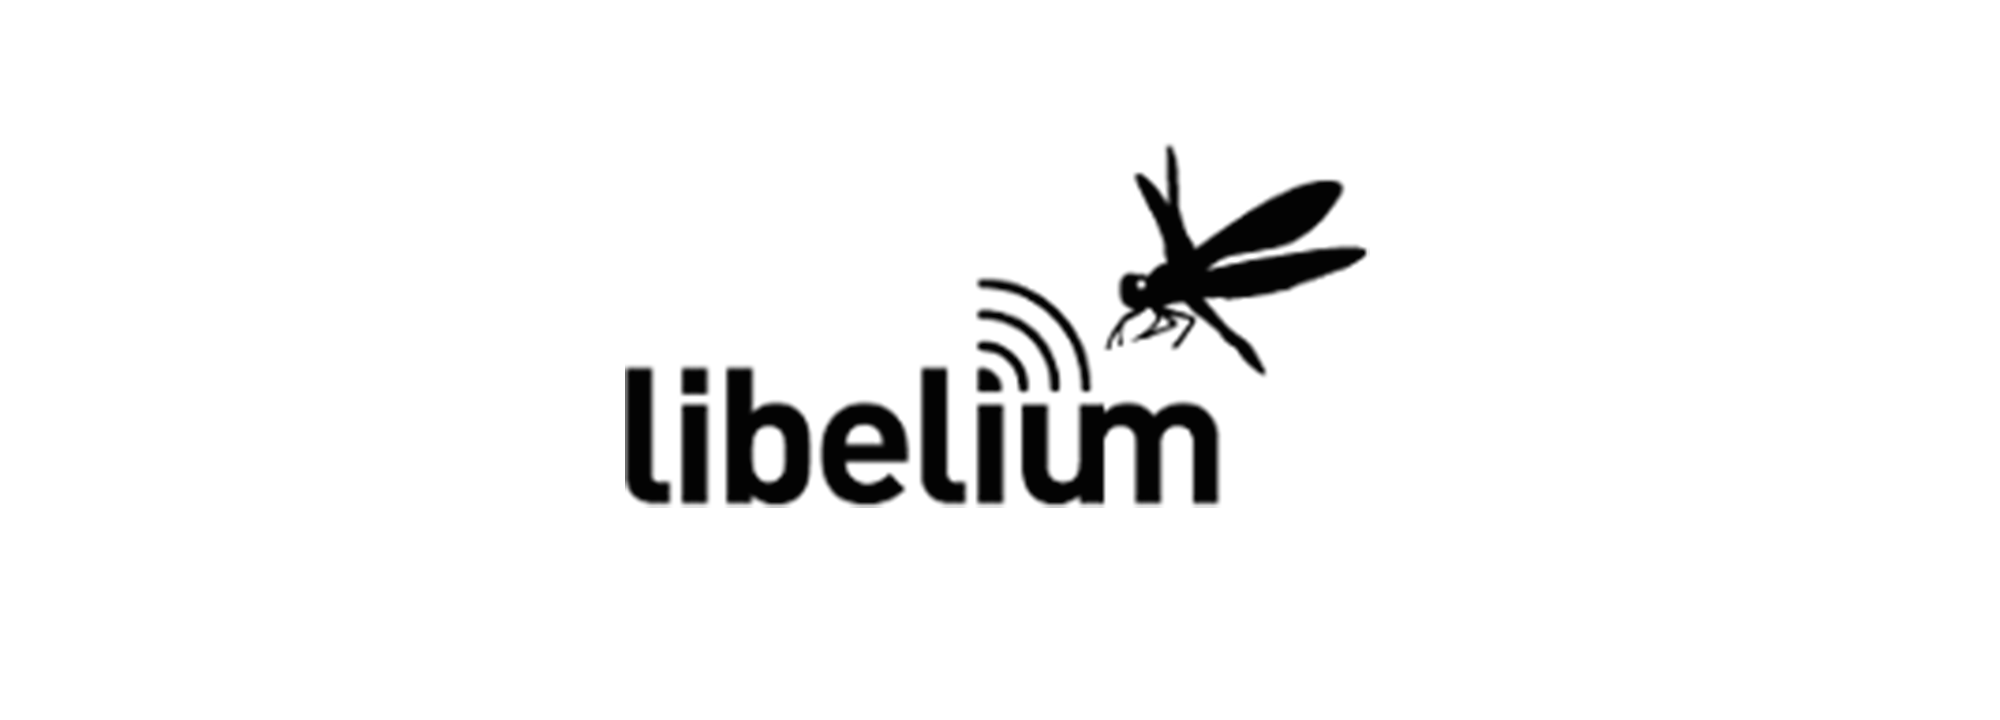 libelium